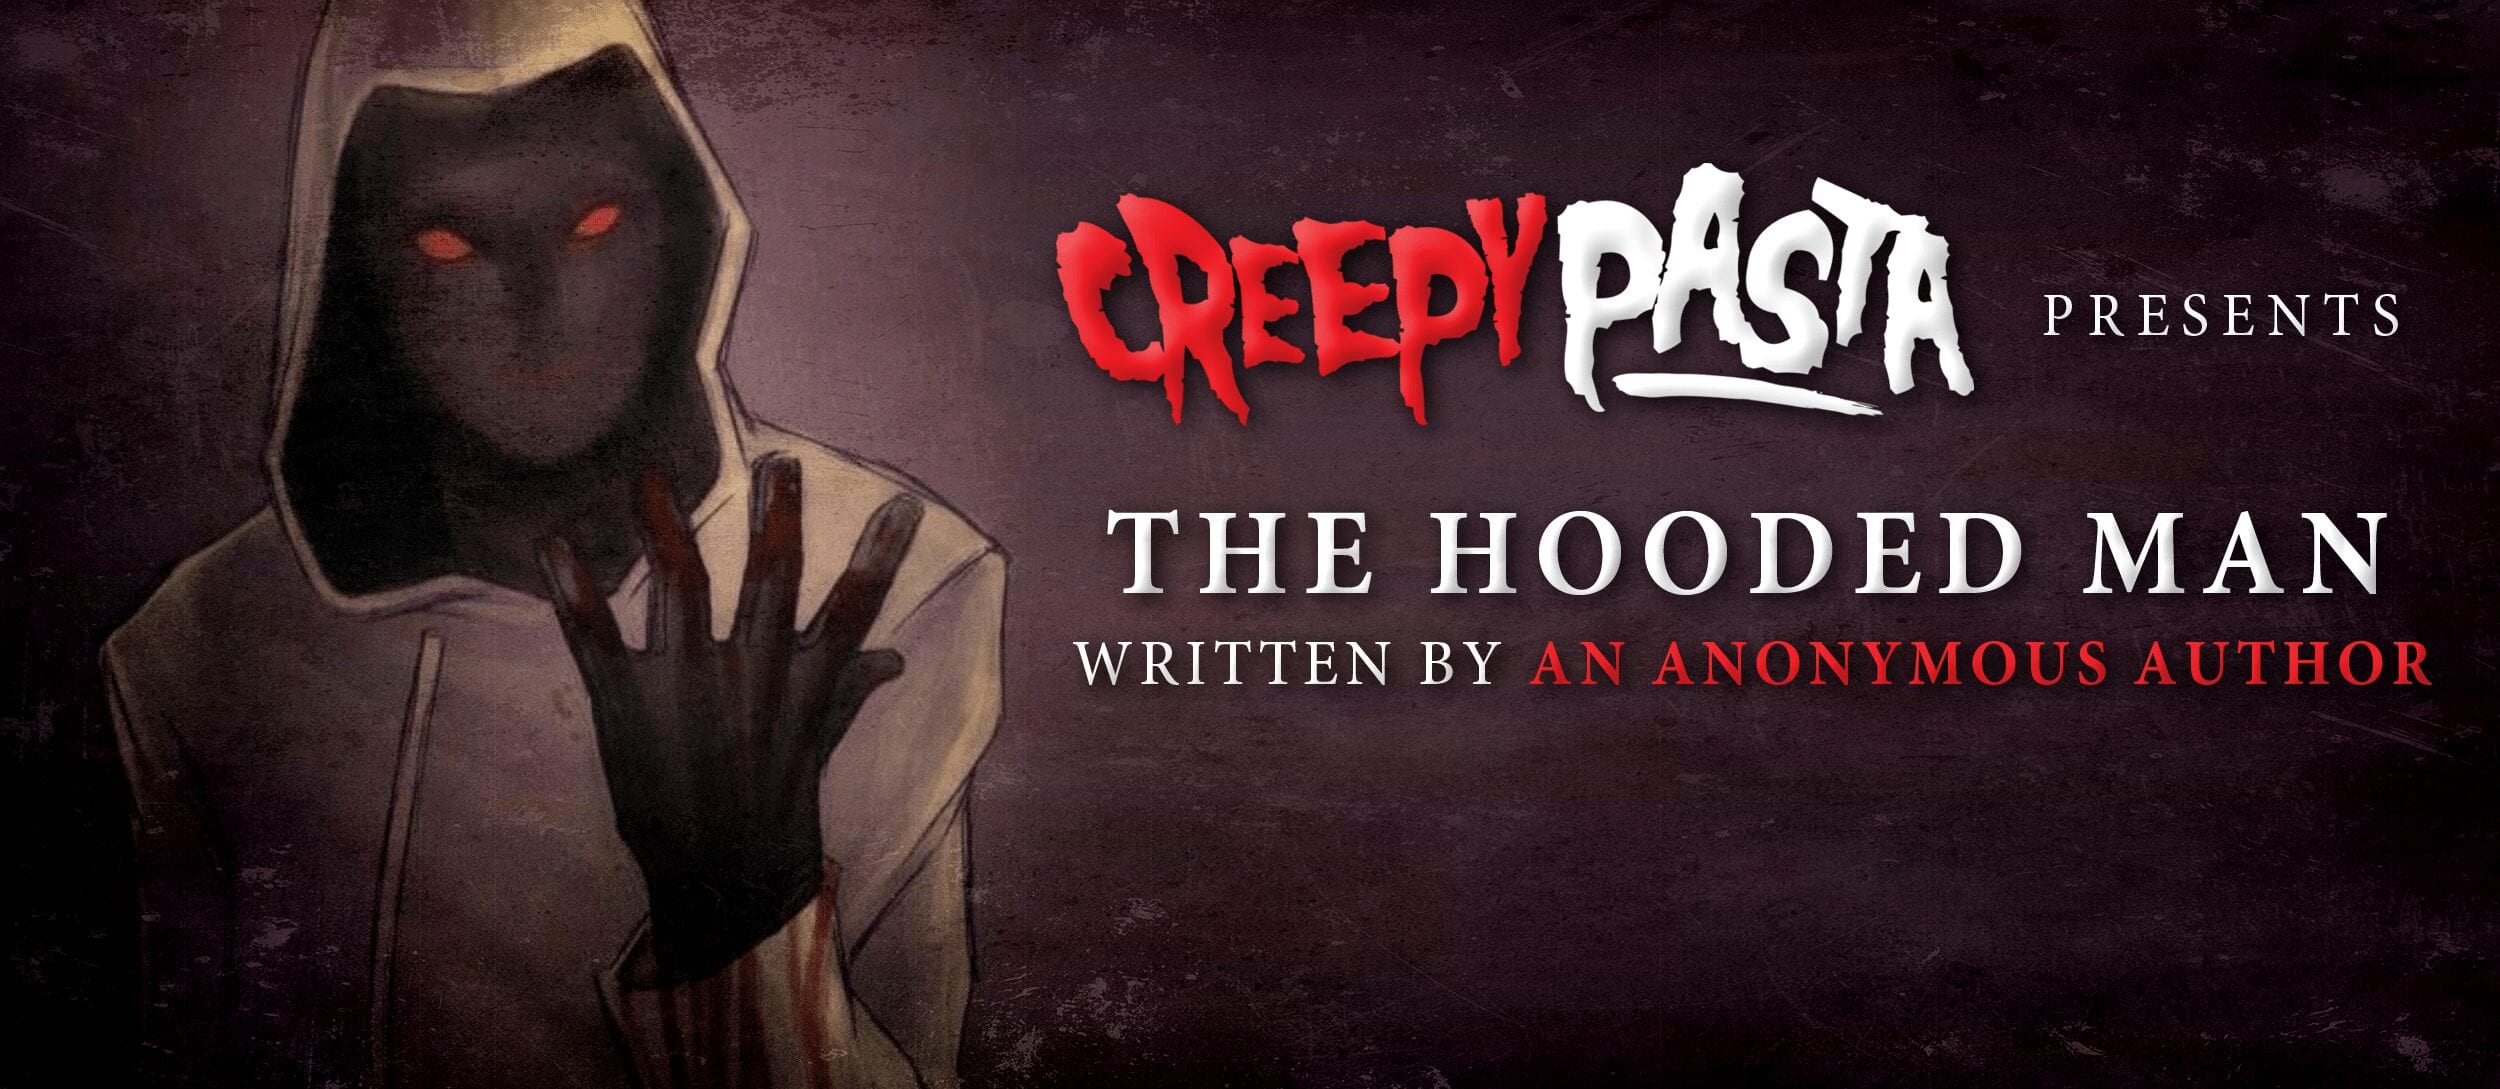 Hoodie (The Hooded Man) - Creepypasta